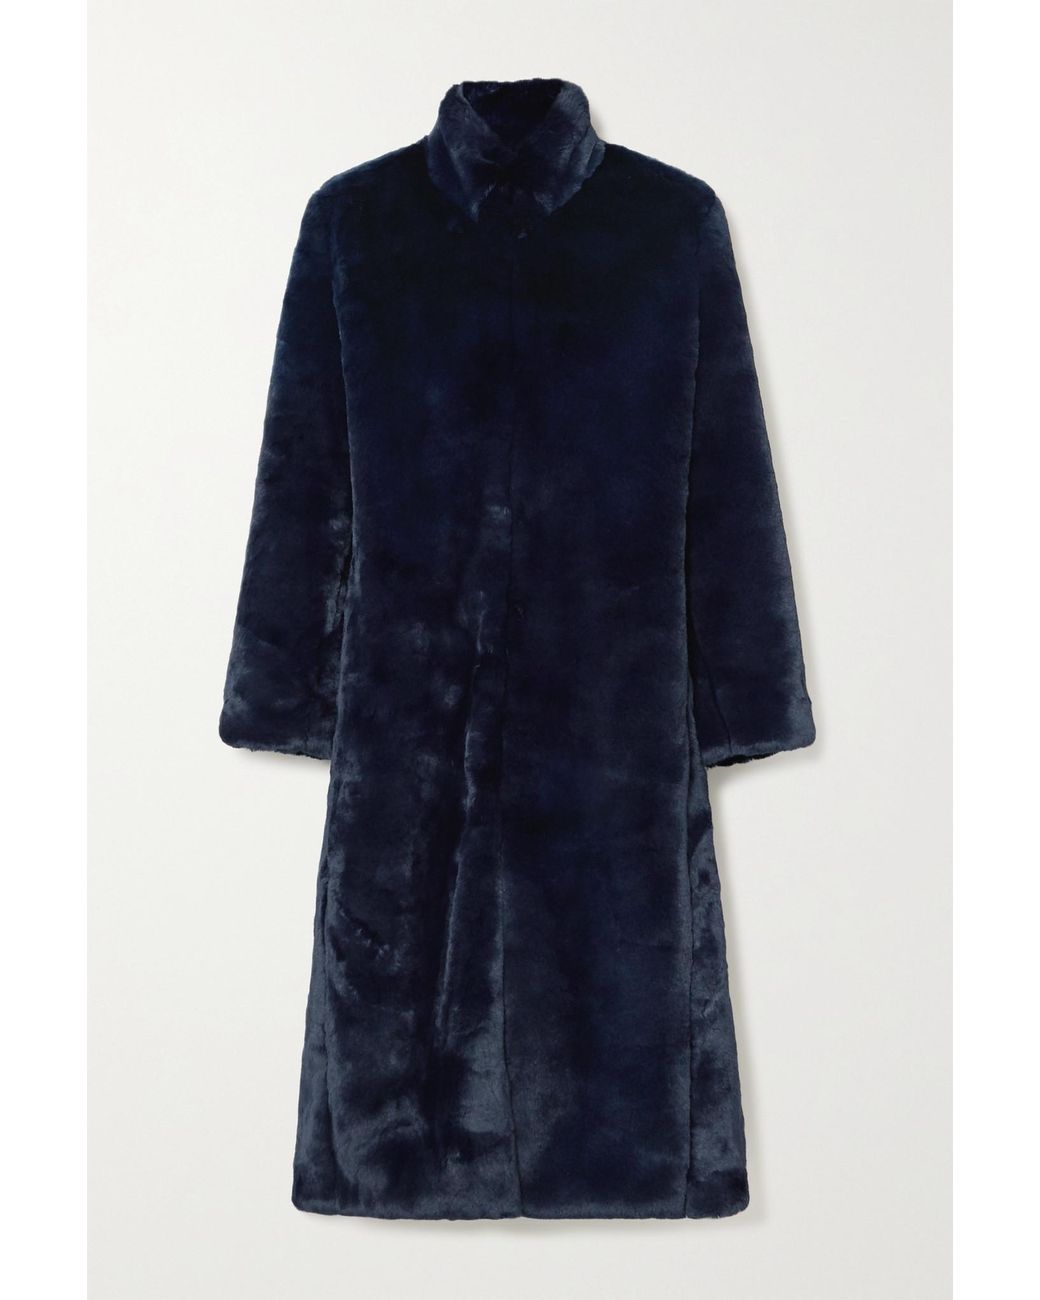 Cefinn Carly Faux Fur Coat in Blue - Lyst